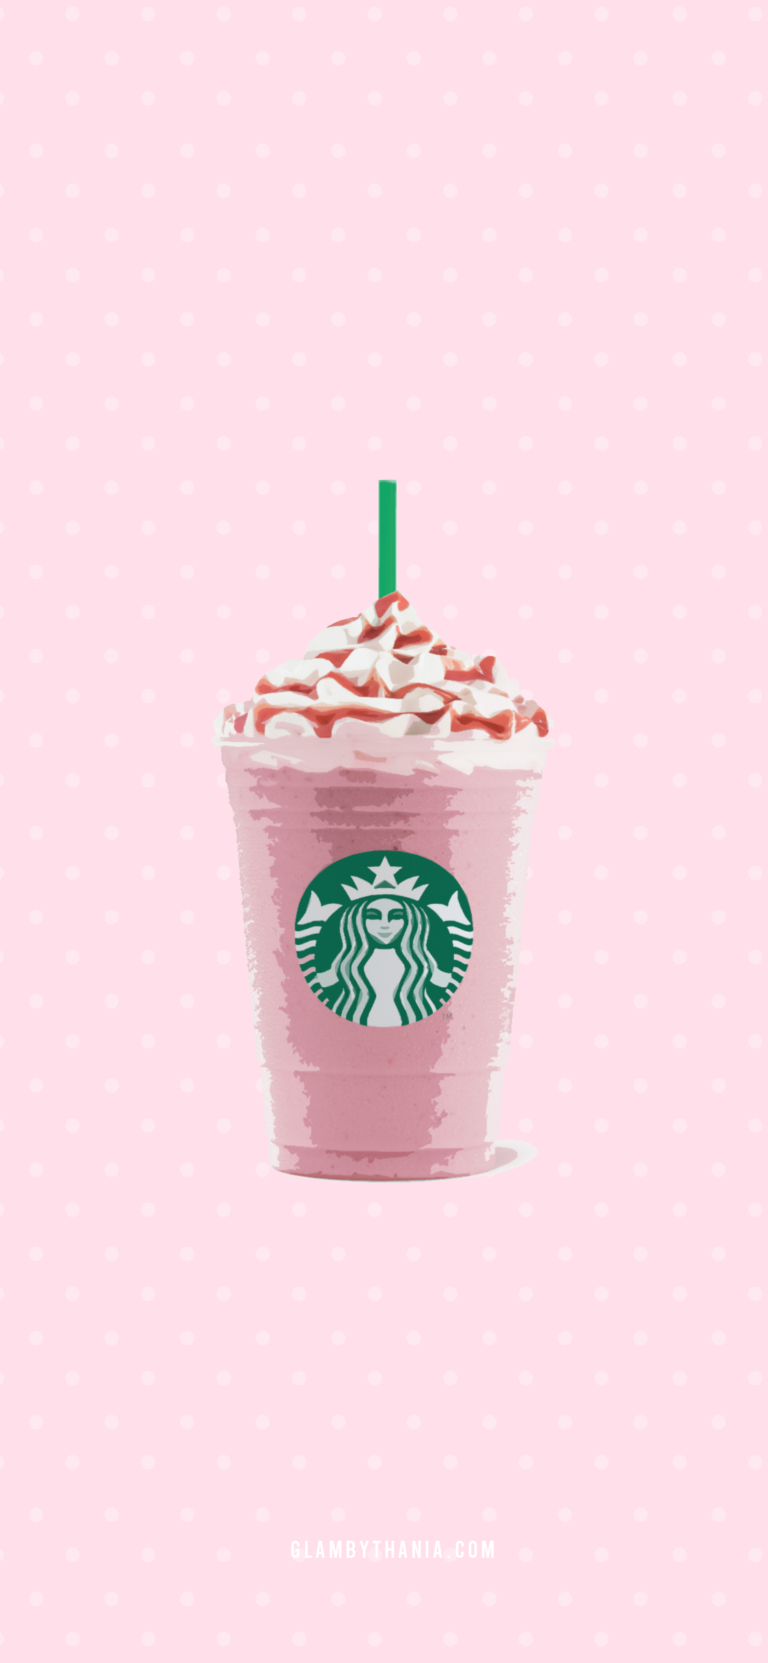 Starbucks Coffee Logo iPhone Wallpapers Free Download